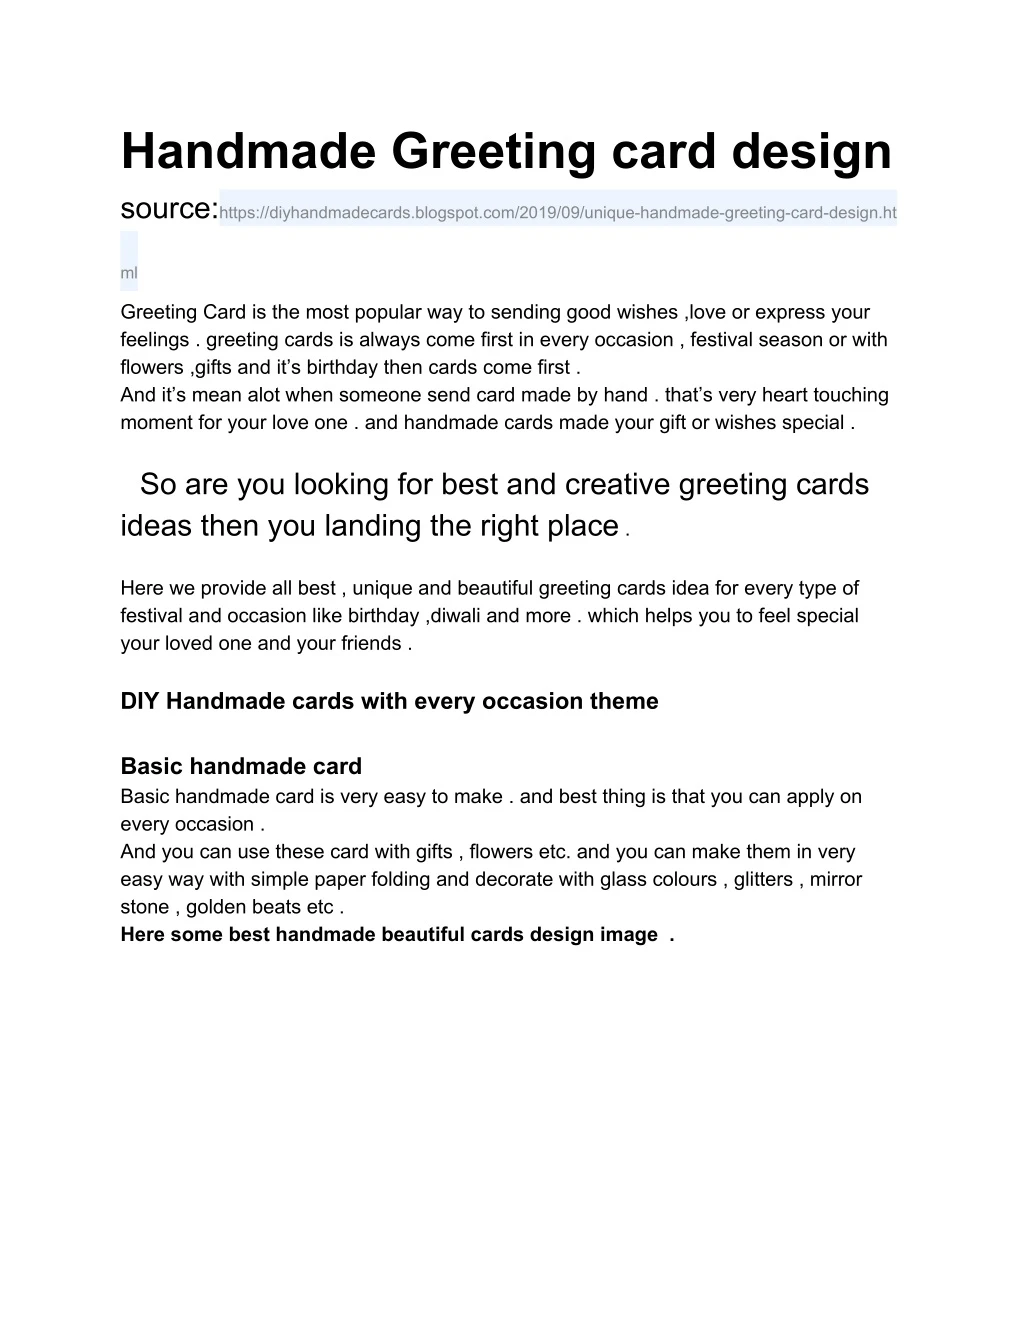 handmade greeting card design source https